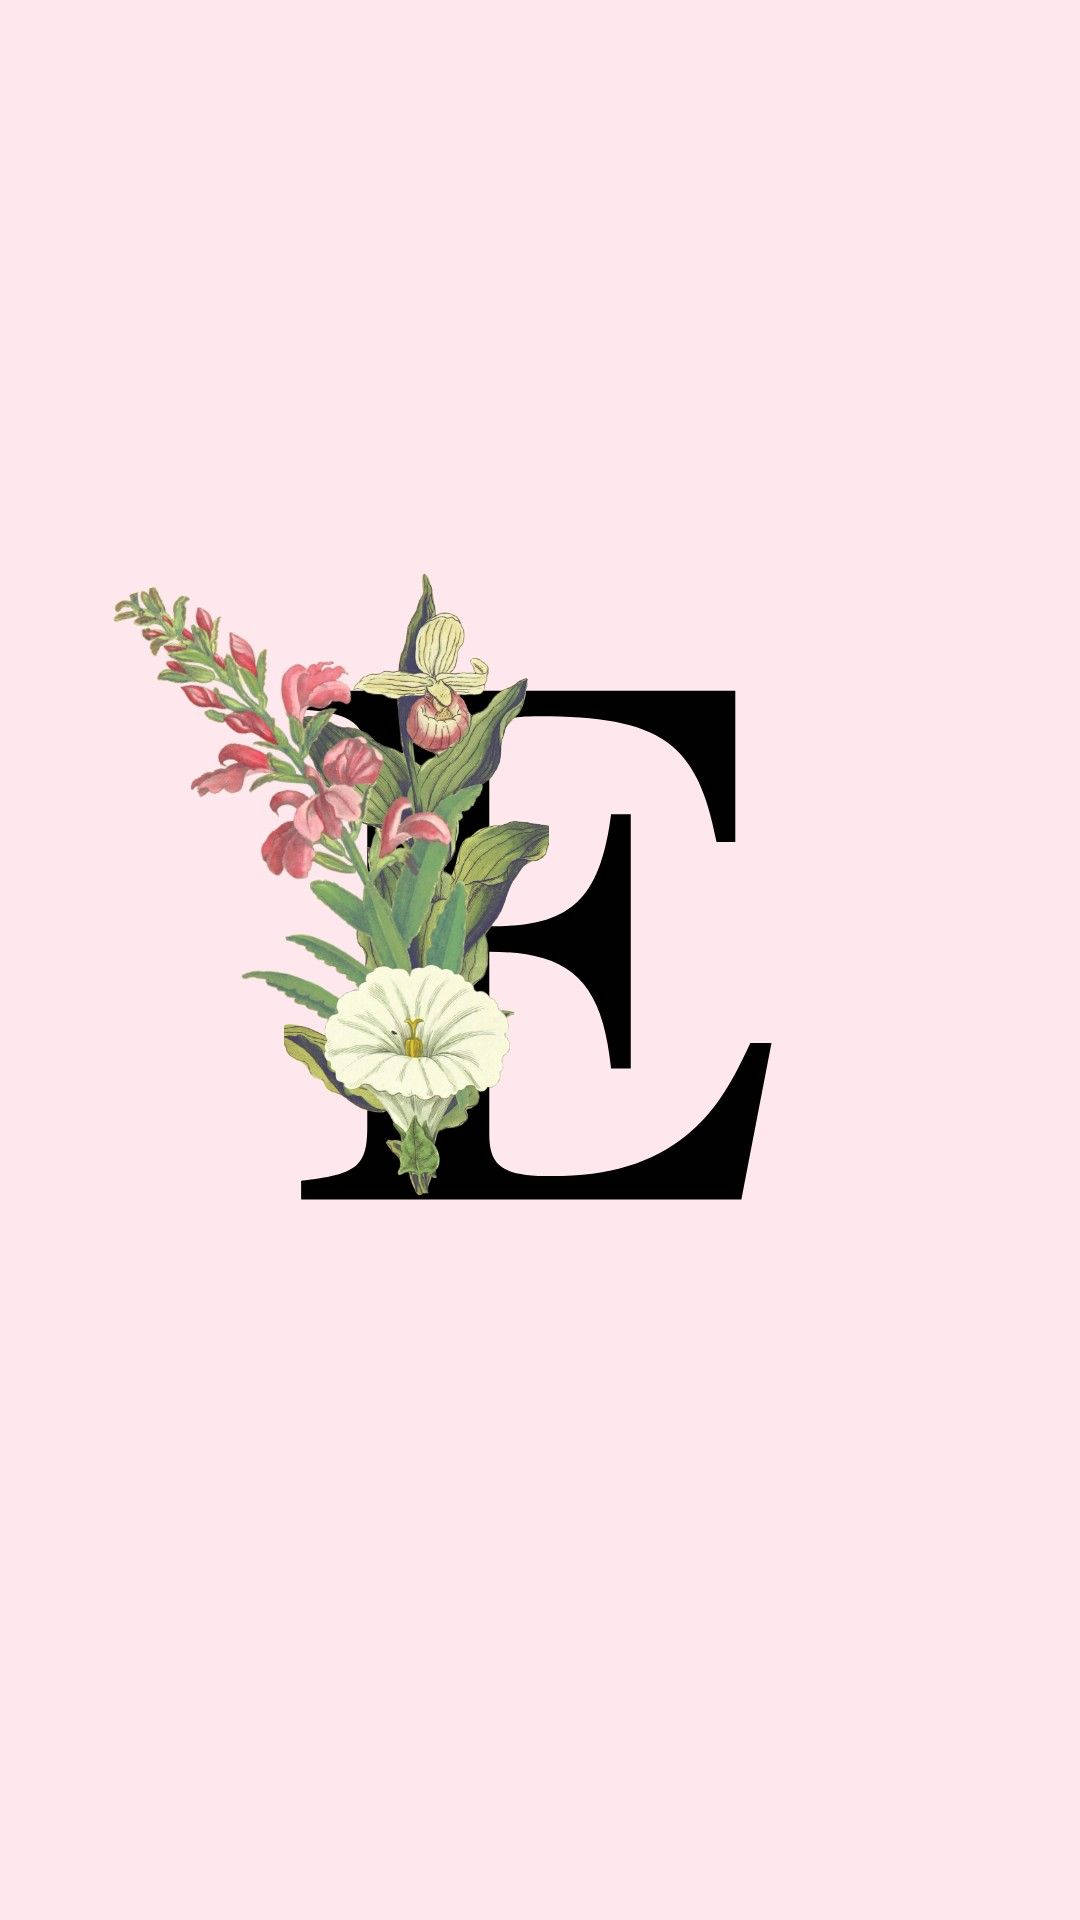 Black Letter E With Flowers Wallpaper